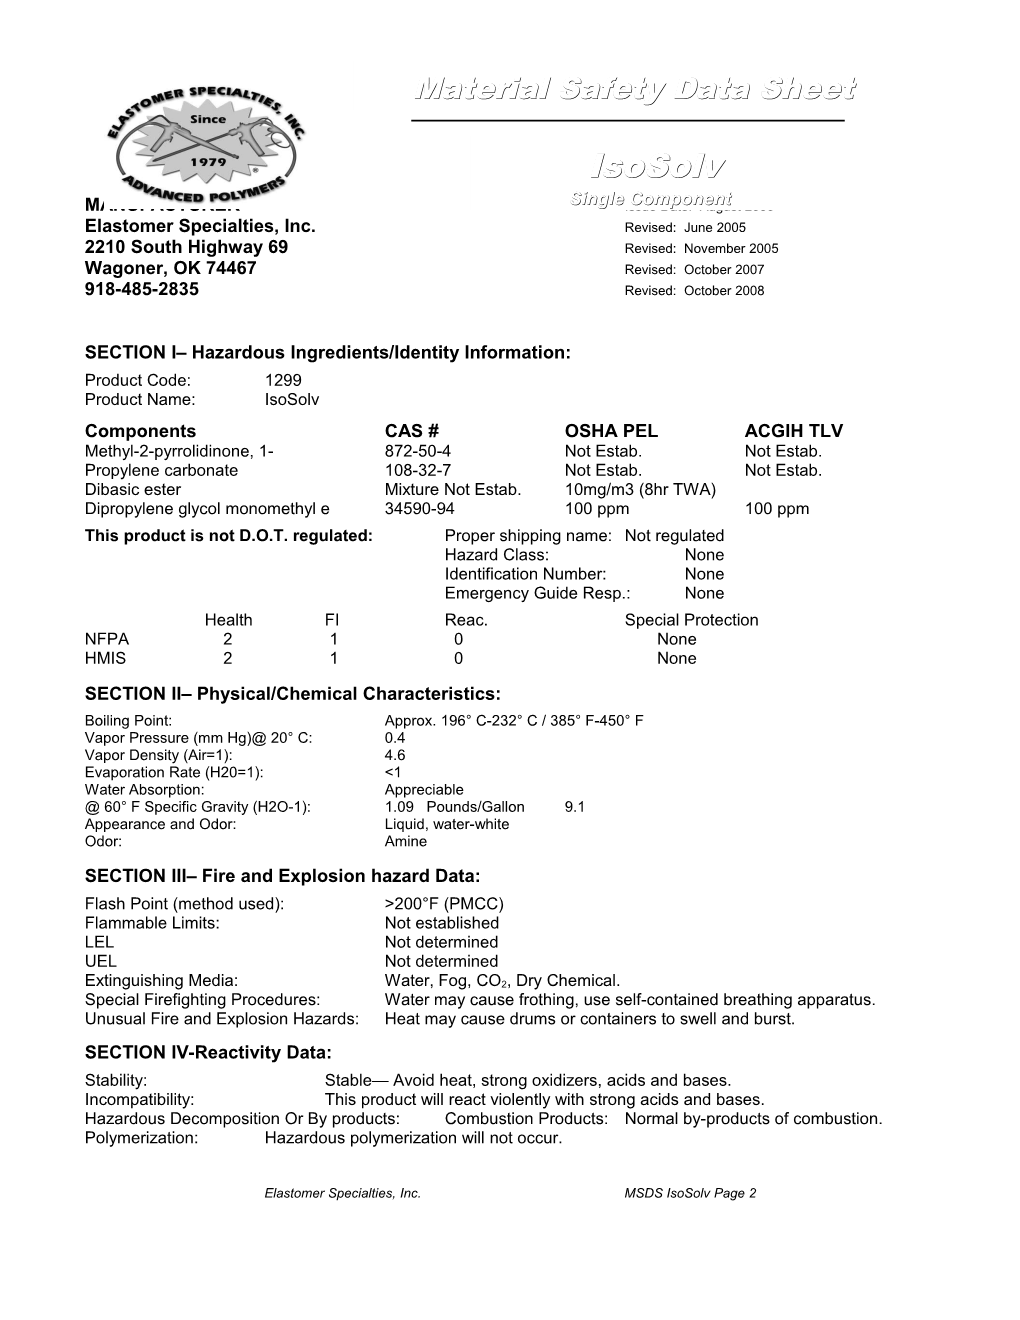 SECTION I Hazardous Ingredients/Identity Information